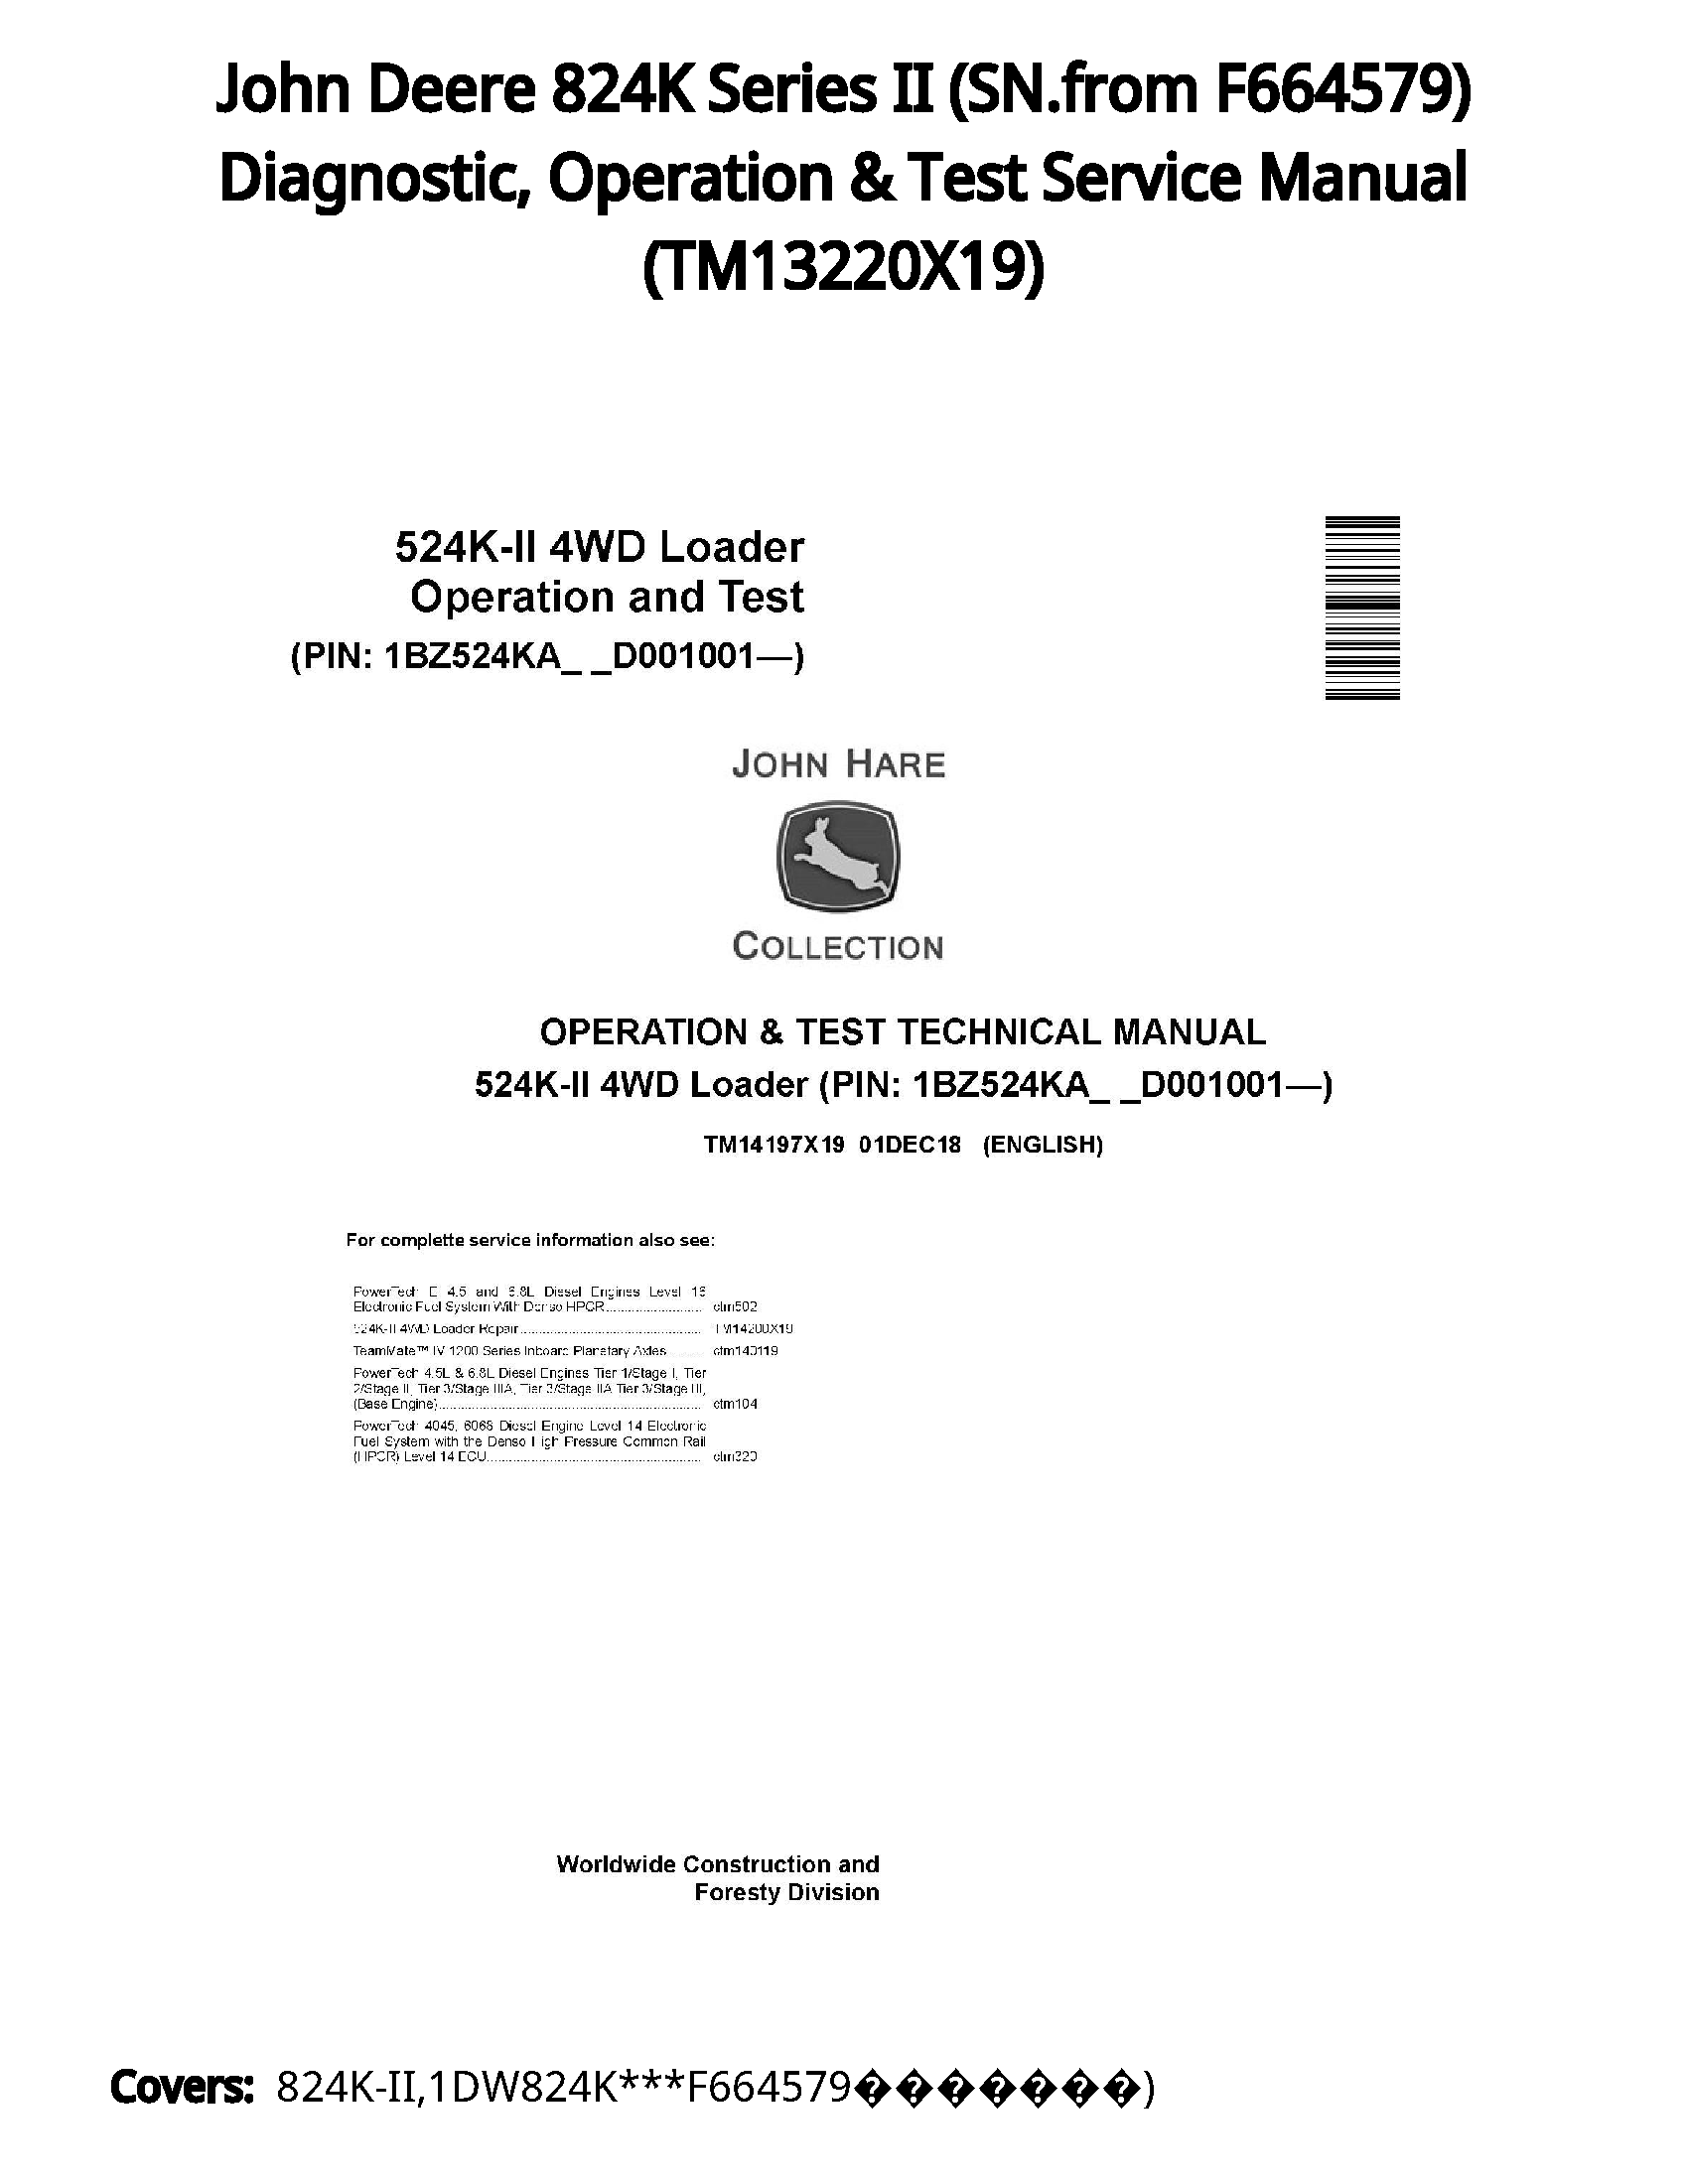 John Deere 824K Series II (SN.from F664579) Diagnostic  Operation & Test Service Manual - TM13220X19